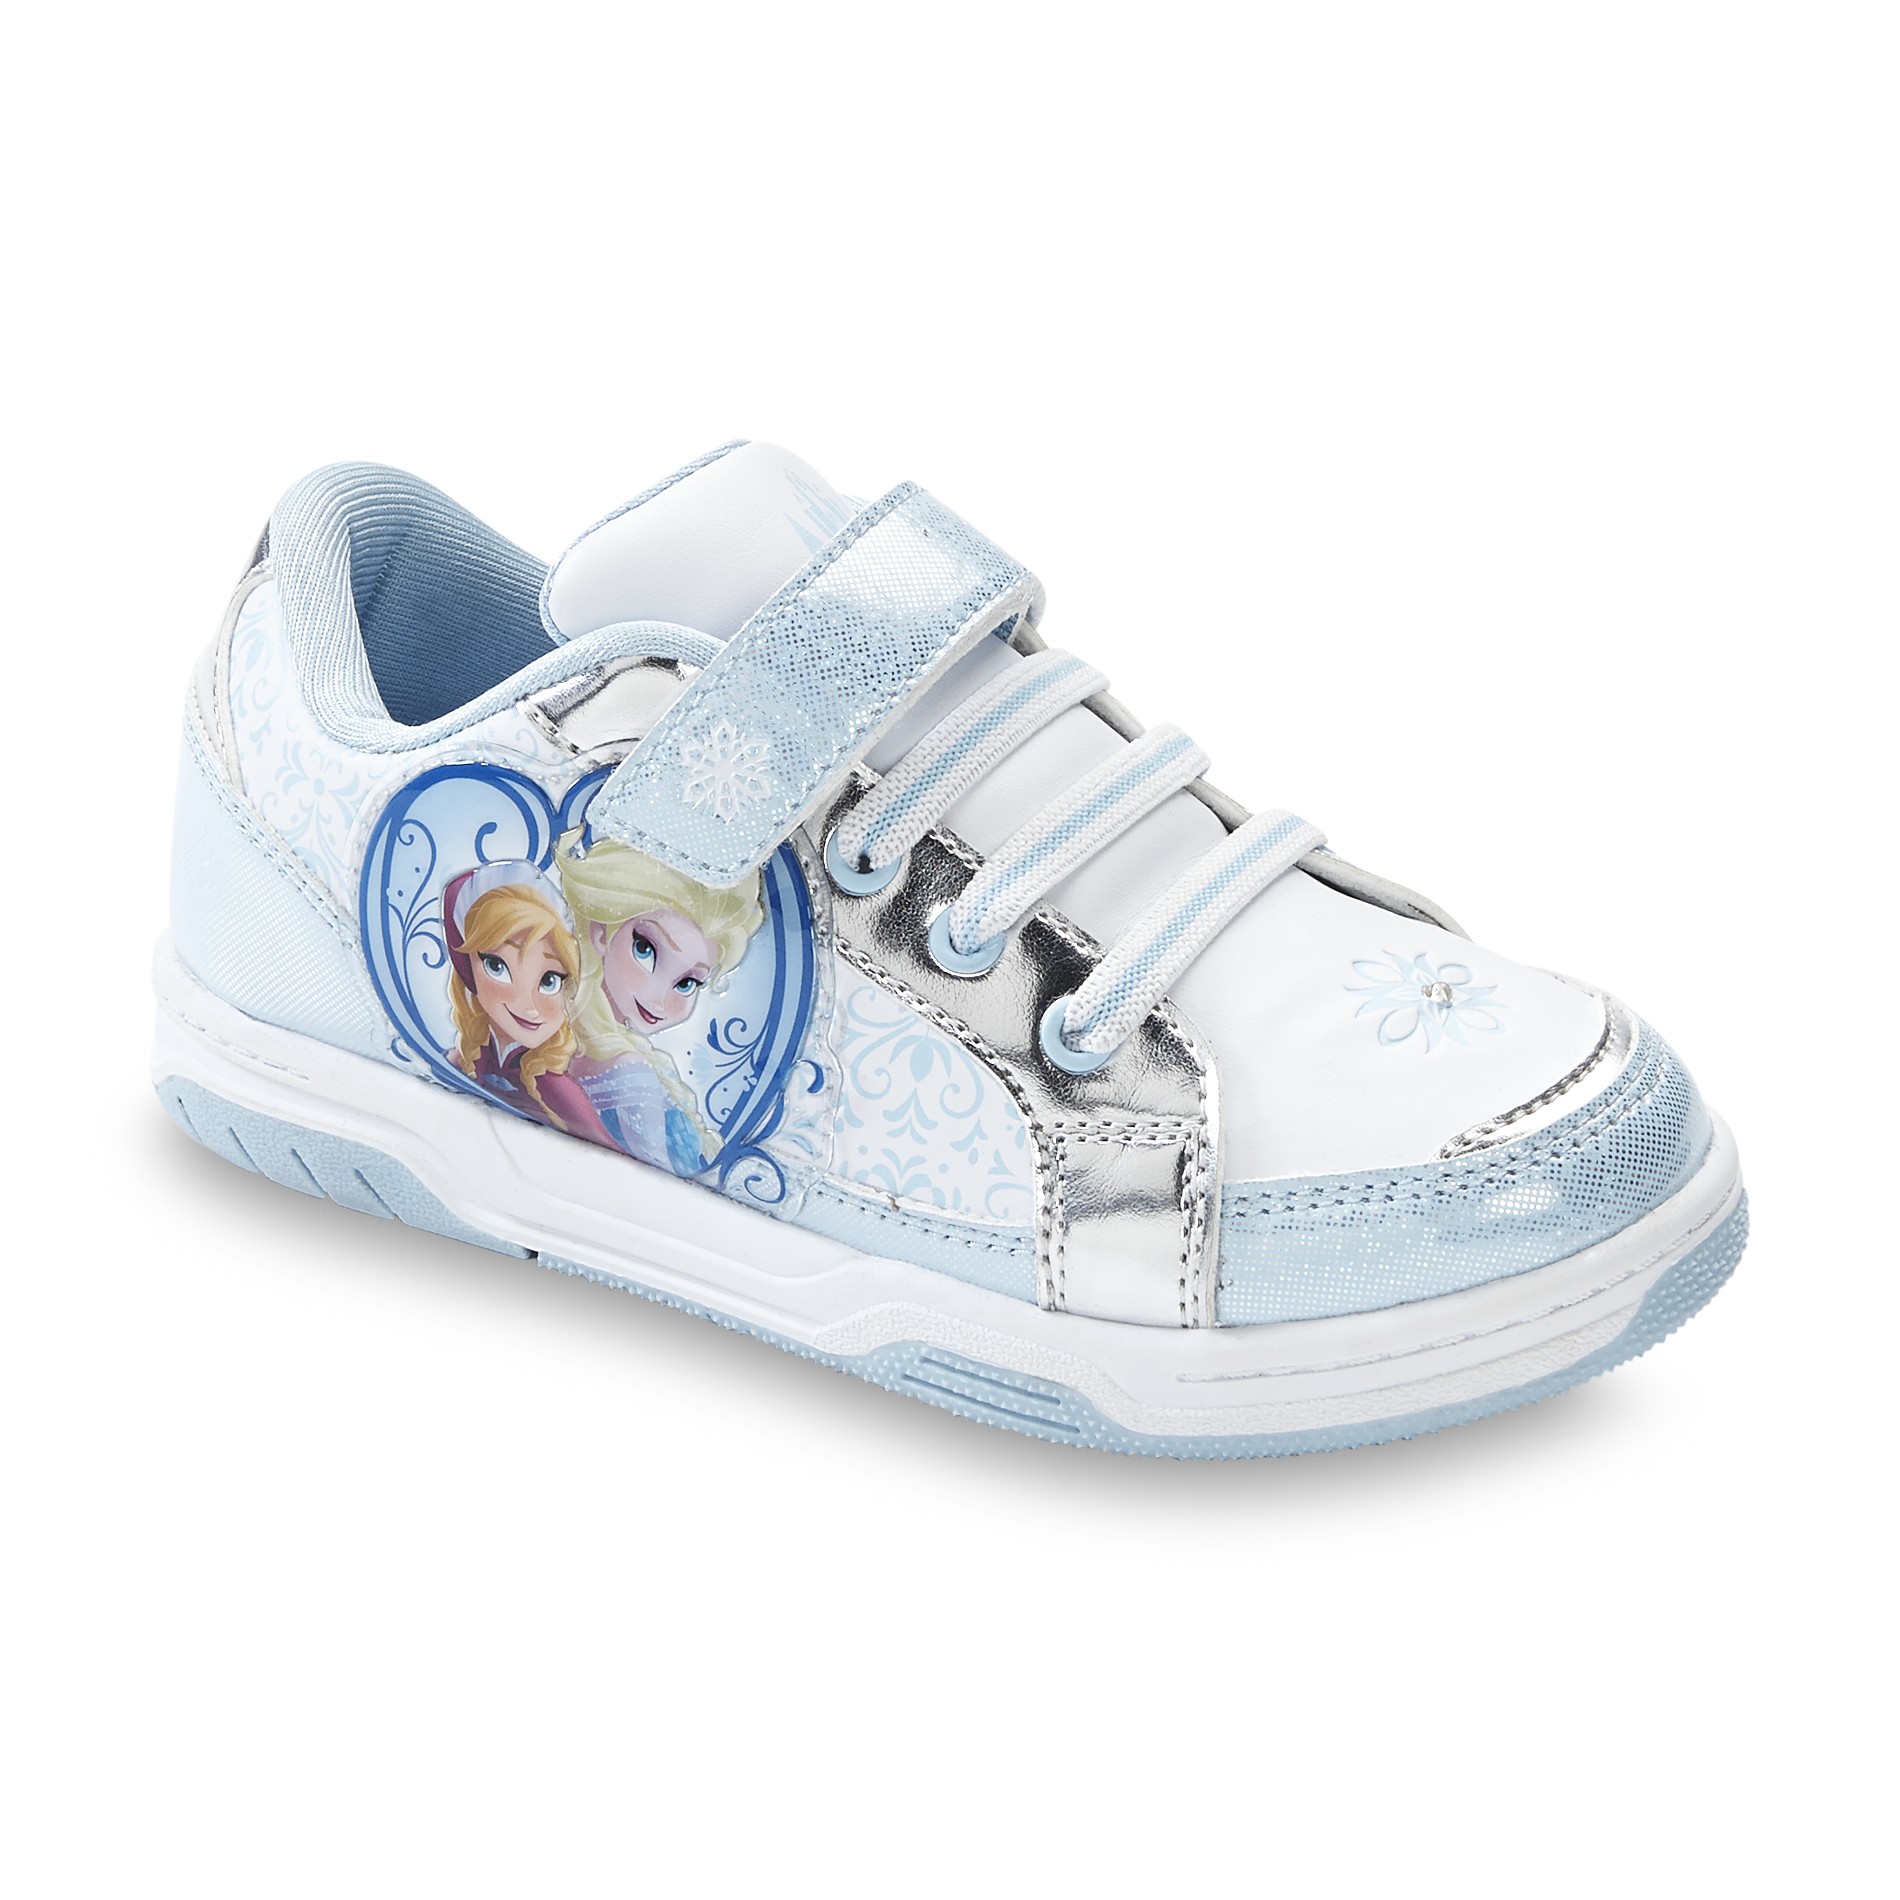 Disney Frozen Toddler/Girls’ Anna Elsa Light Up Sneakers—$10.99! Only a Few Hours Left!